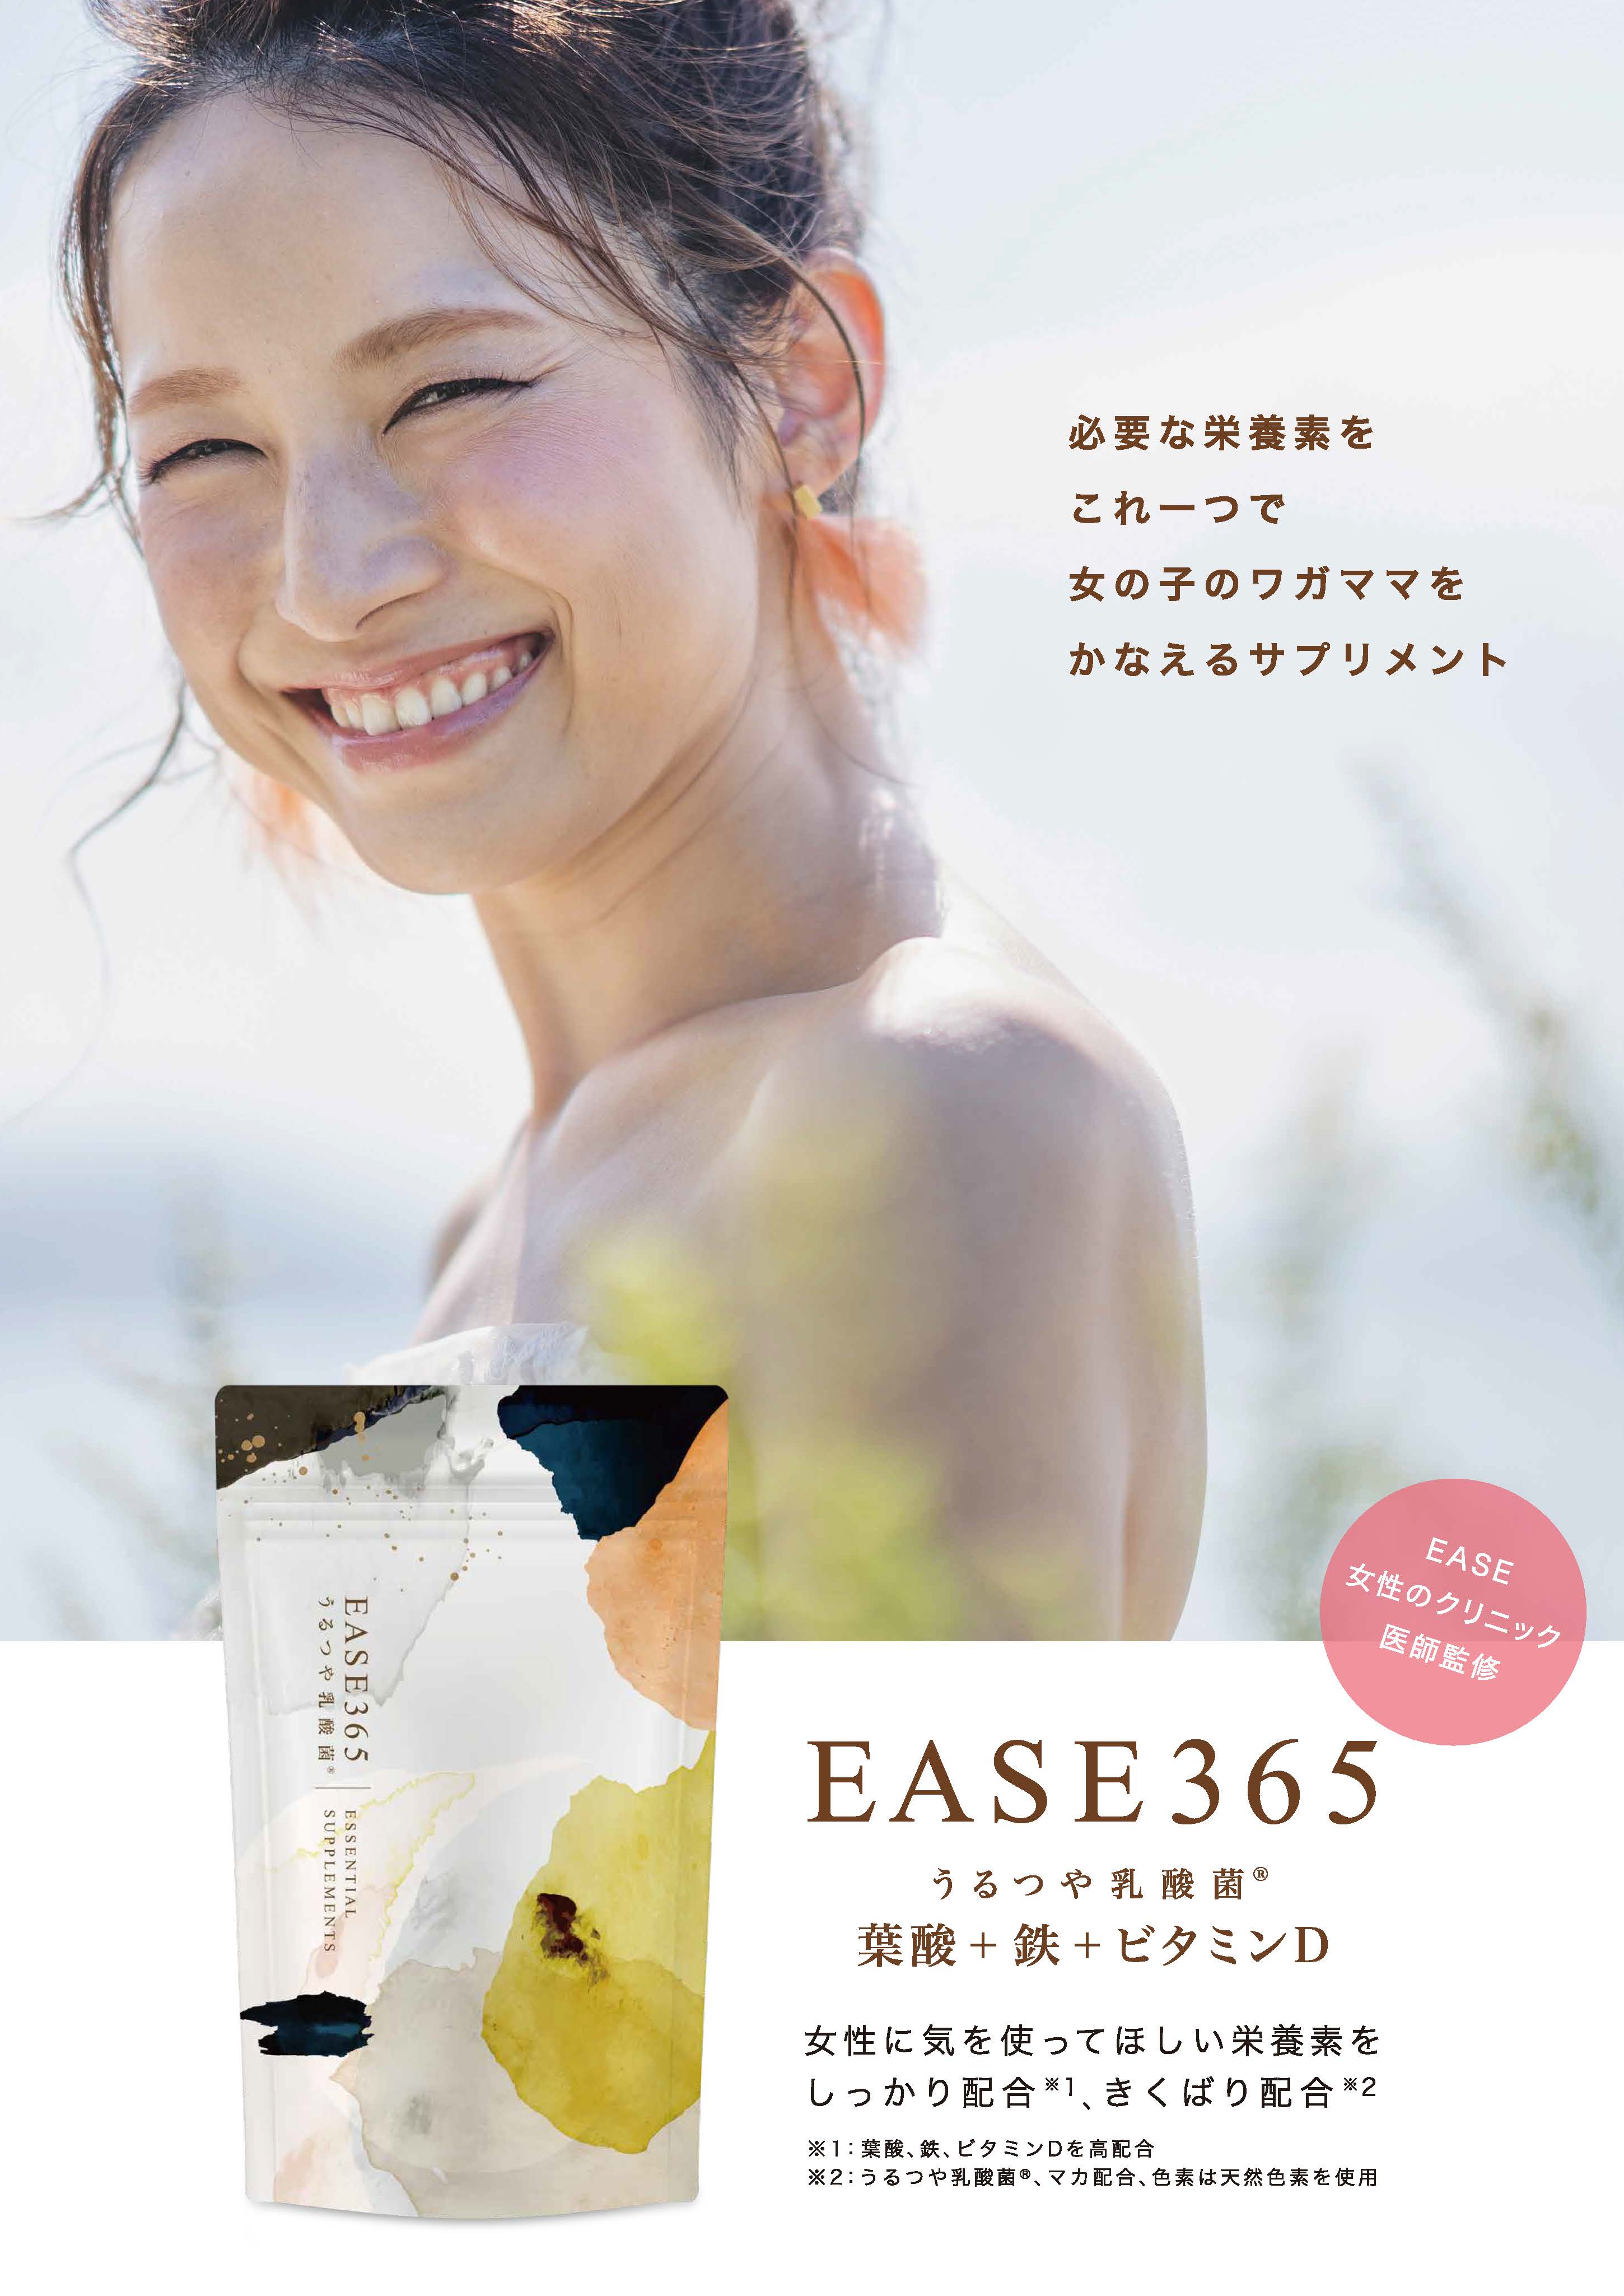 EASE365 妊活 葉酸 妊娠 女性用サプリ 安い サプリメント – EASE